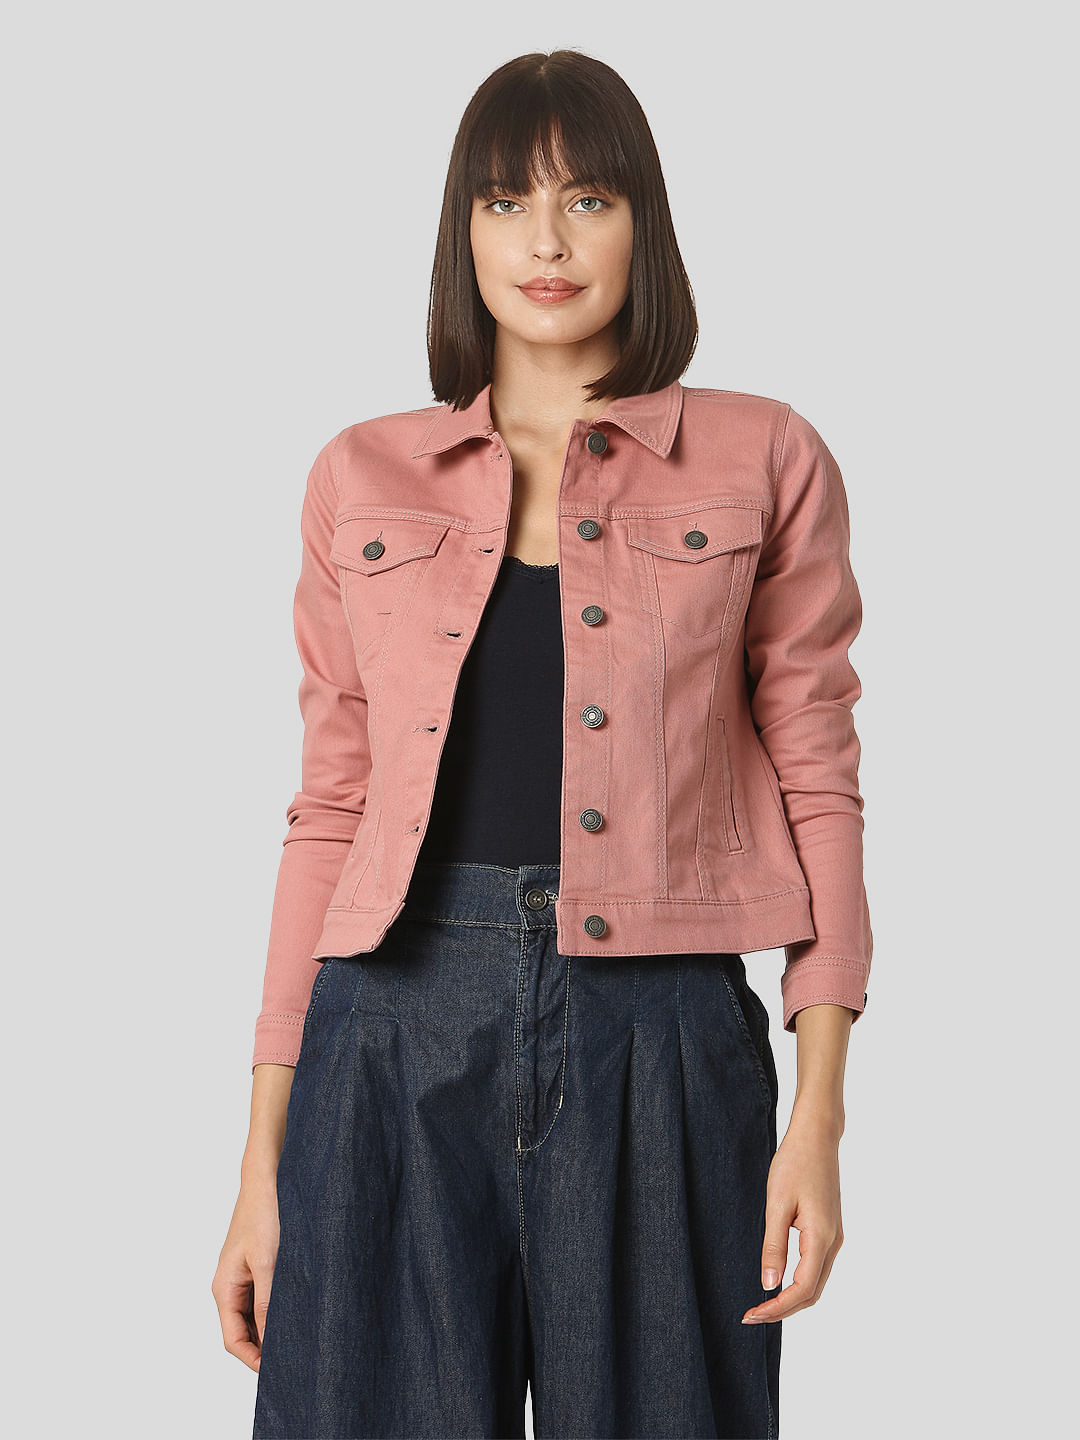 Buy Pink Denim Jacket Online In India.